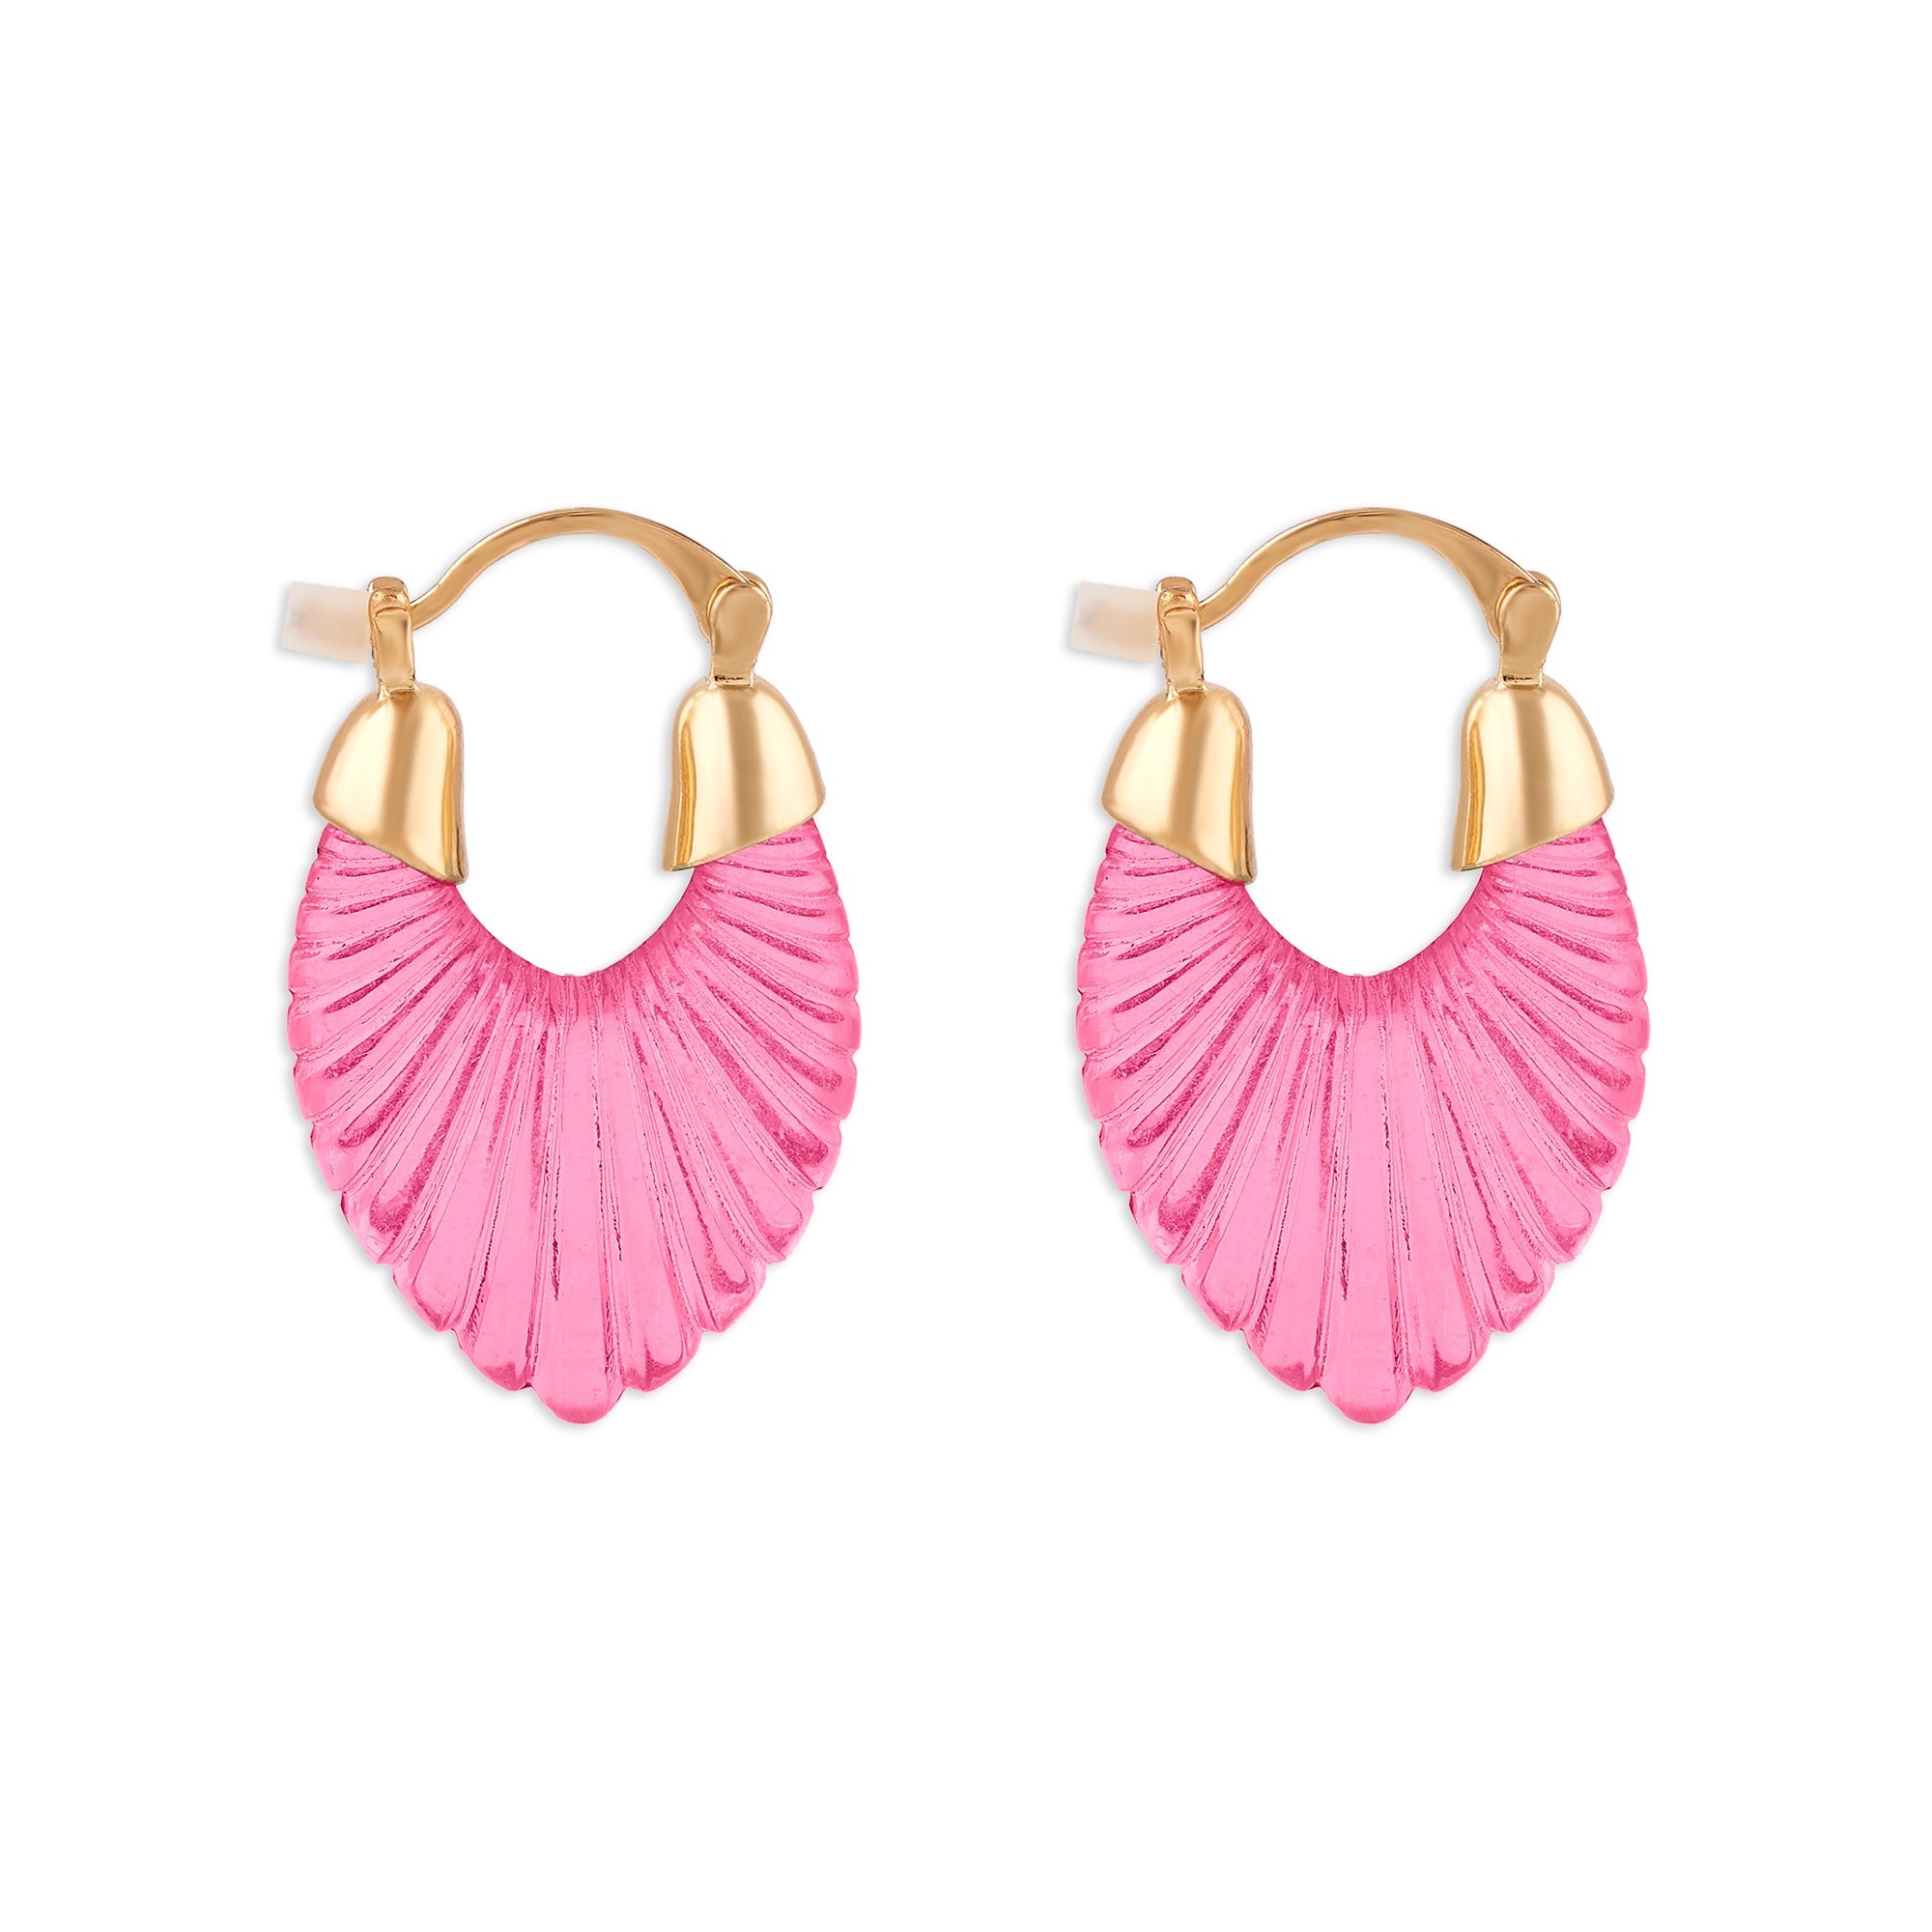 Accessorize London Women's Pink Willow Chunky Resin Oval Hoop Earring